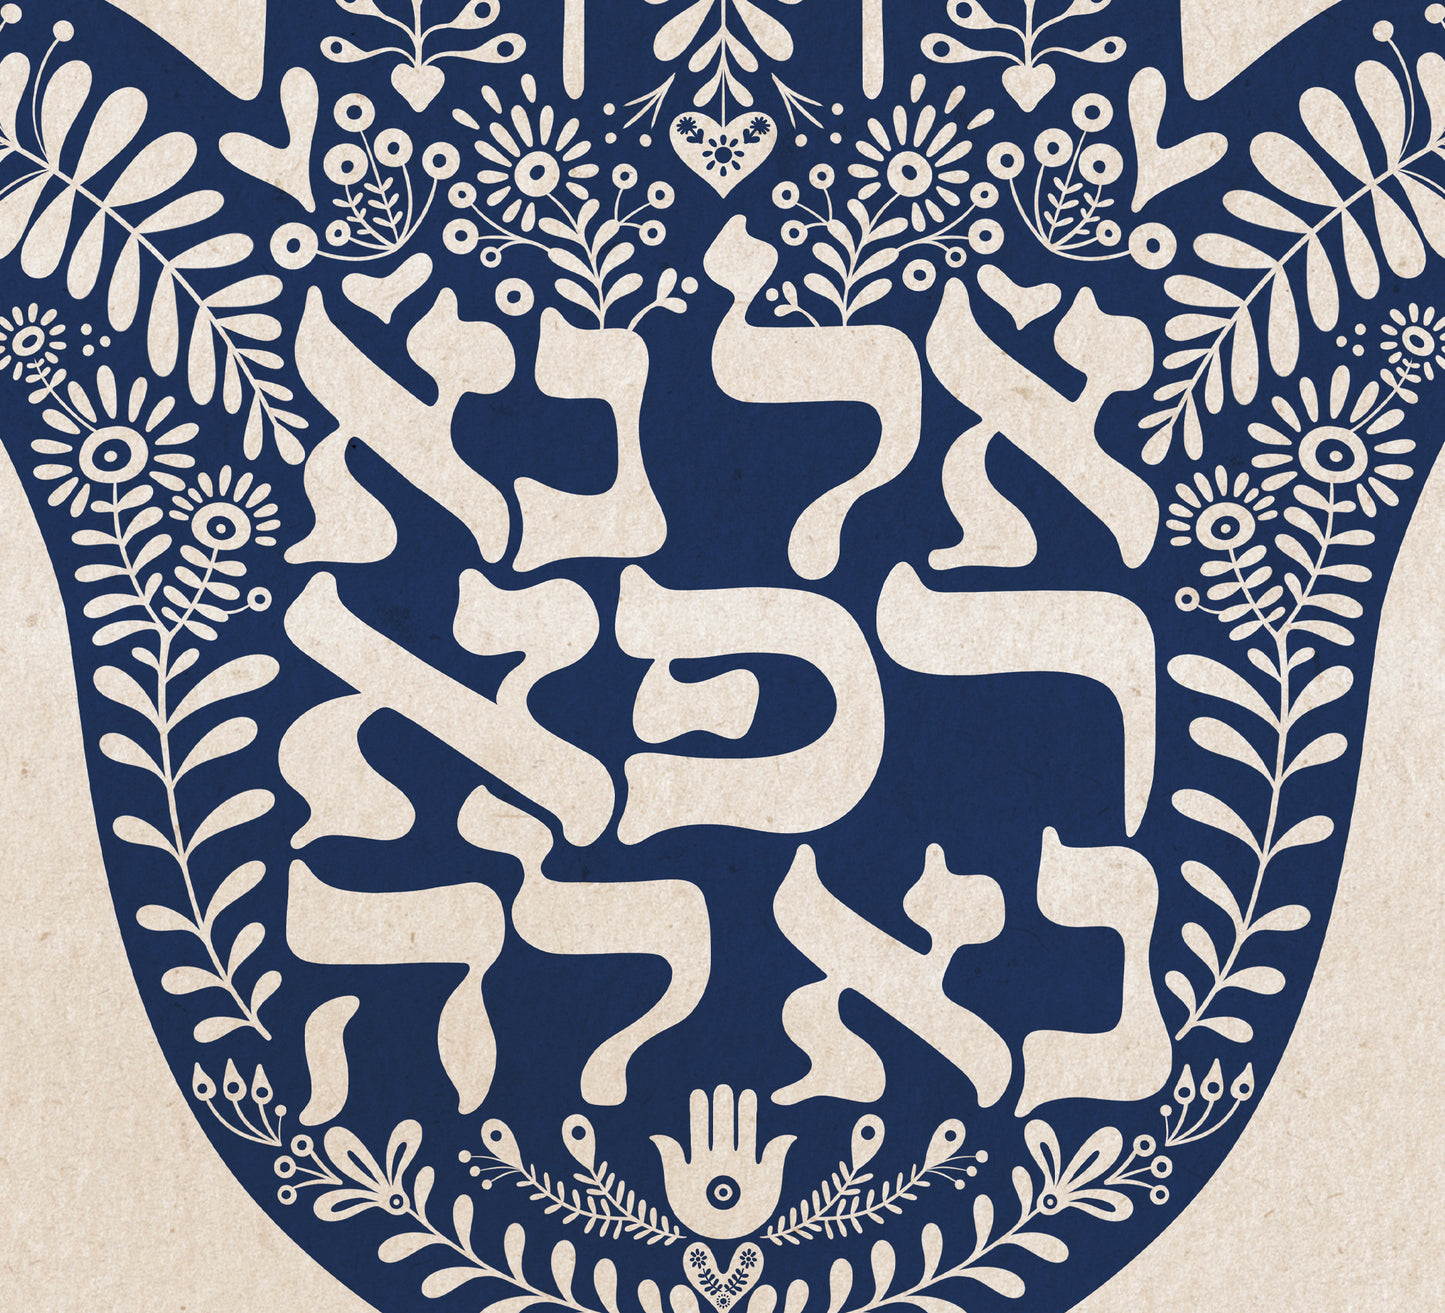 El Na Refa Na La - please God, heal her - Healing Hebrew Prayer Art Print